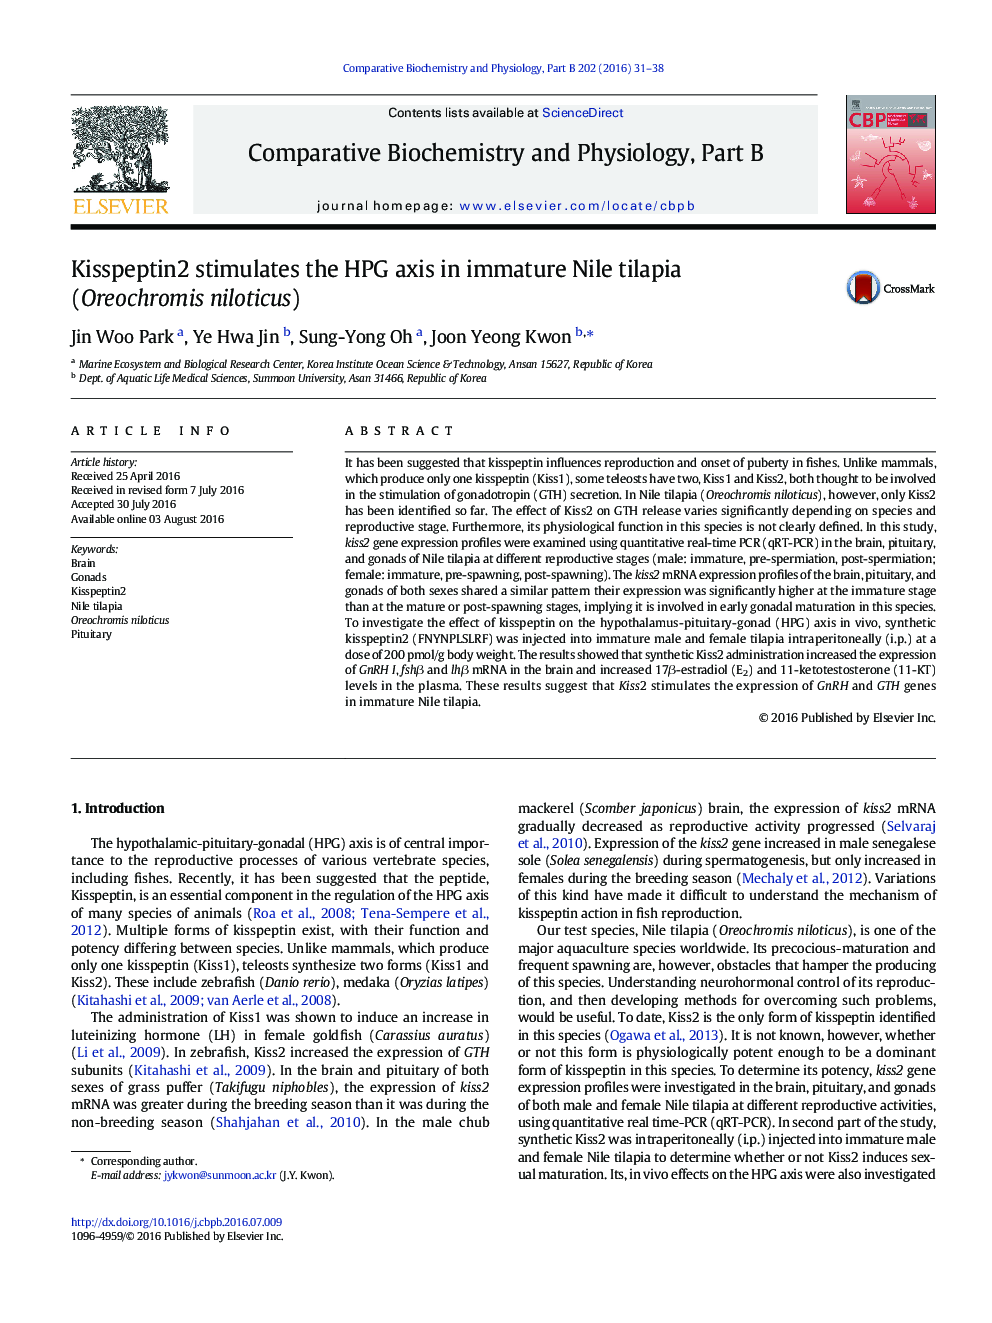 Kisspeptin2 stimulates the HPG axis in immature Nile tilapia (Oreochromis niloticus)